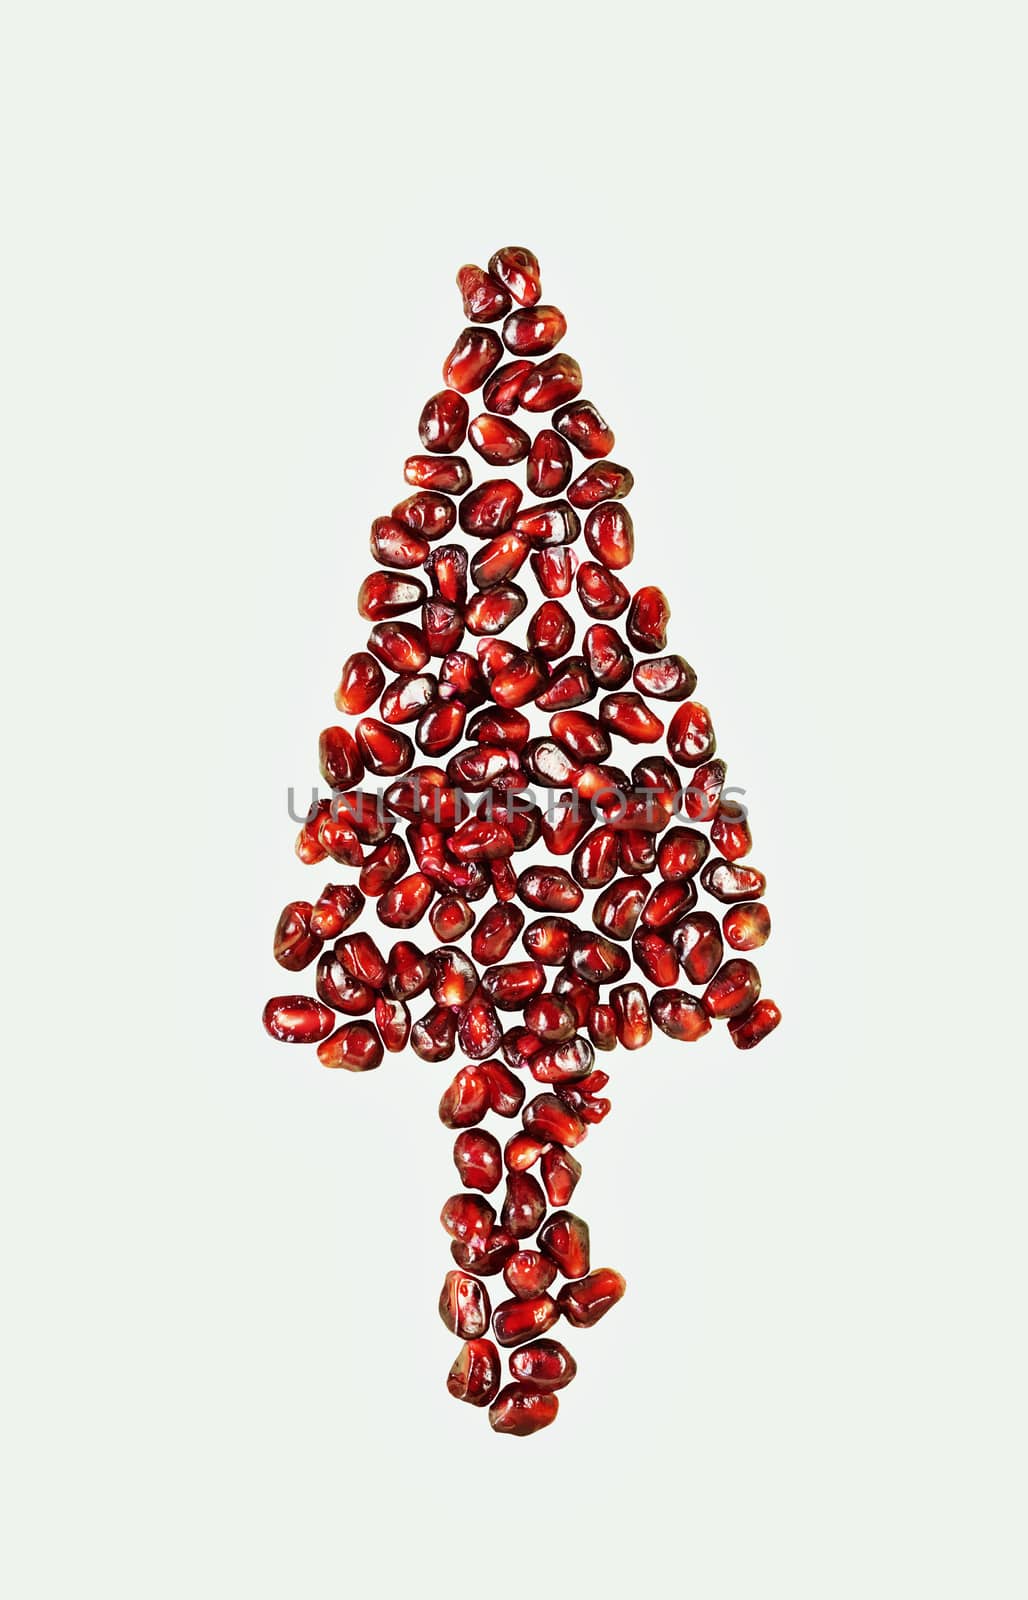 Red Christmas tree by victimewalker